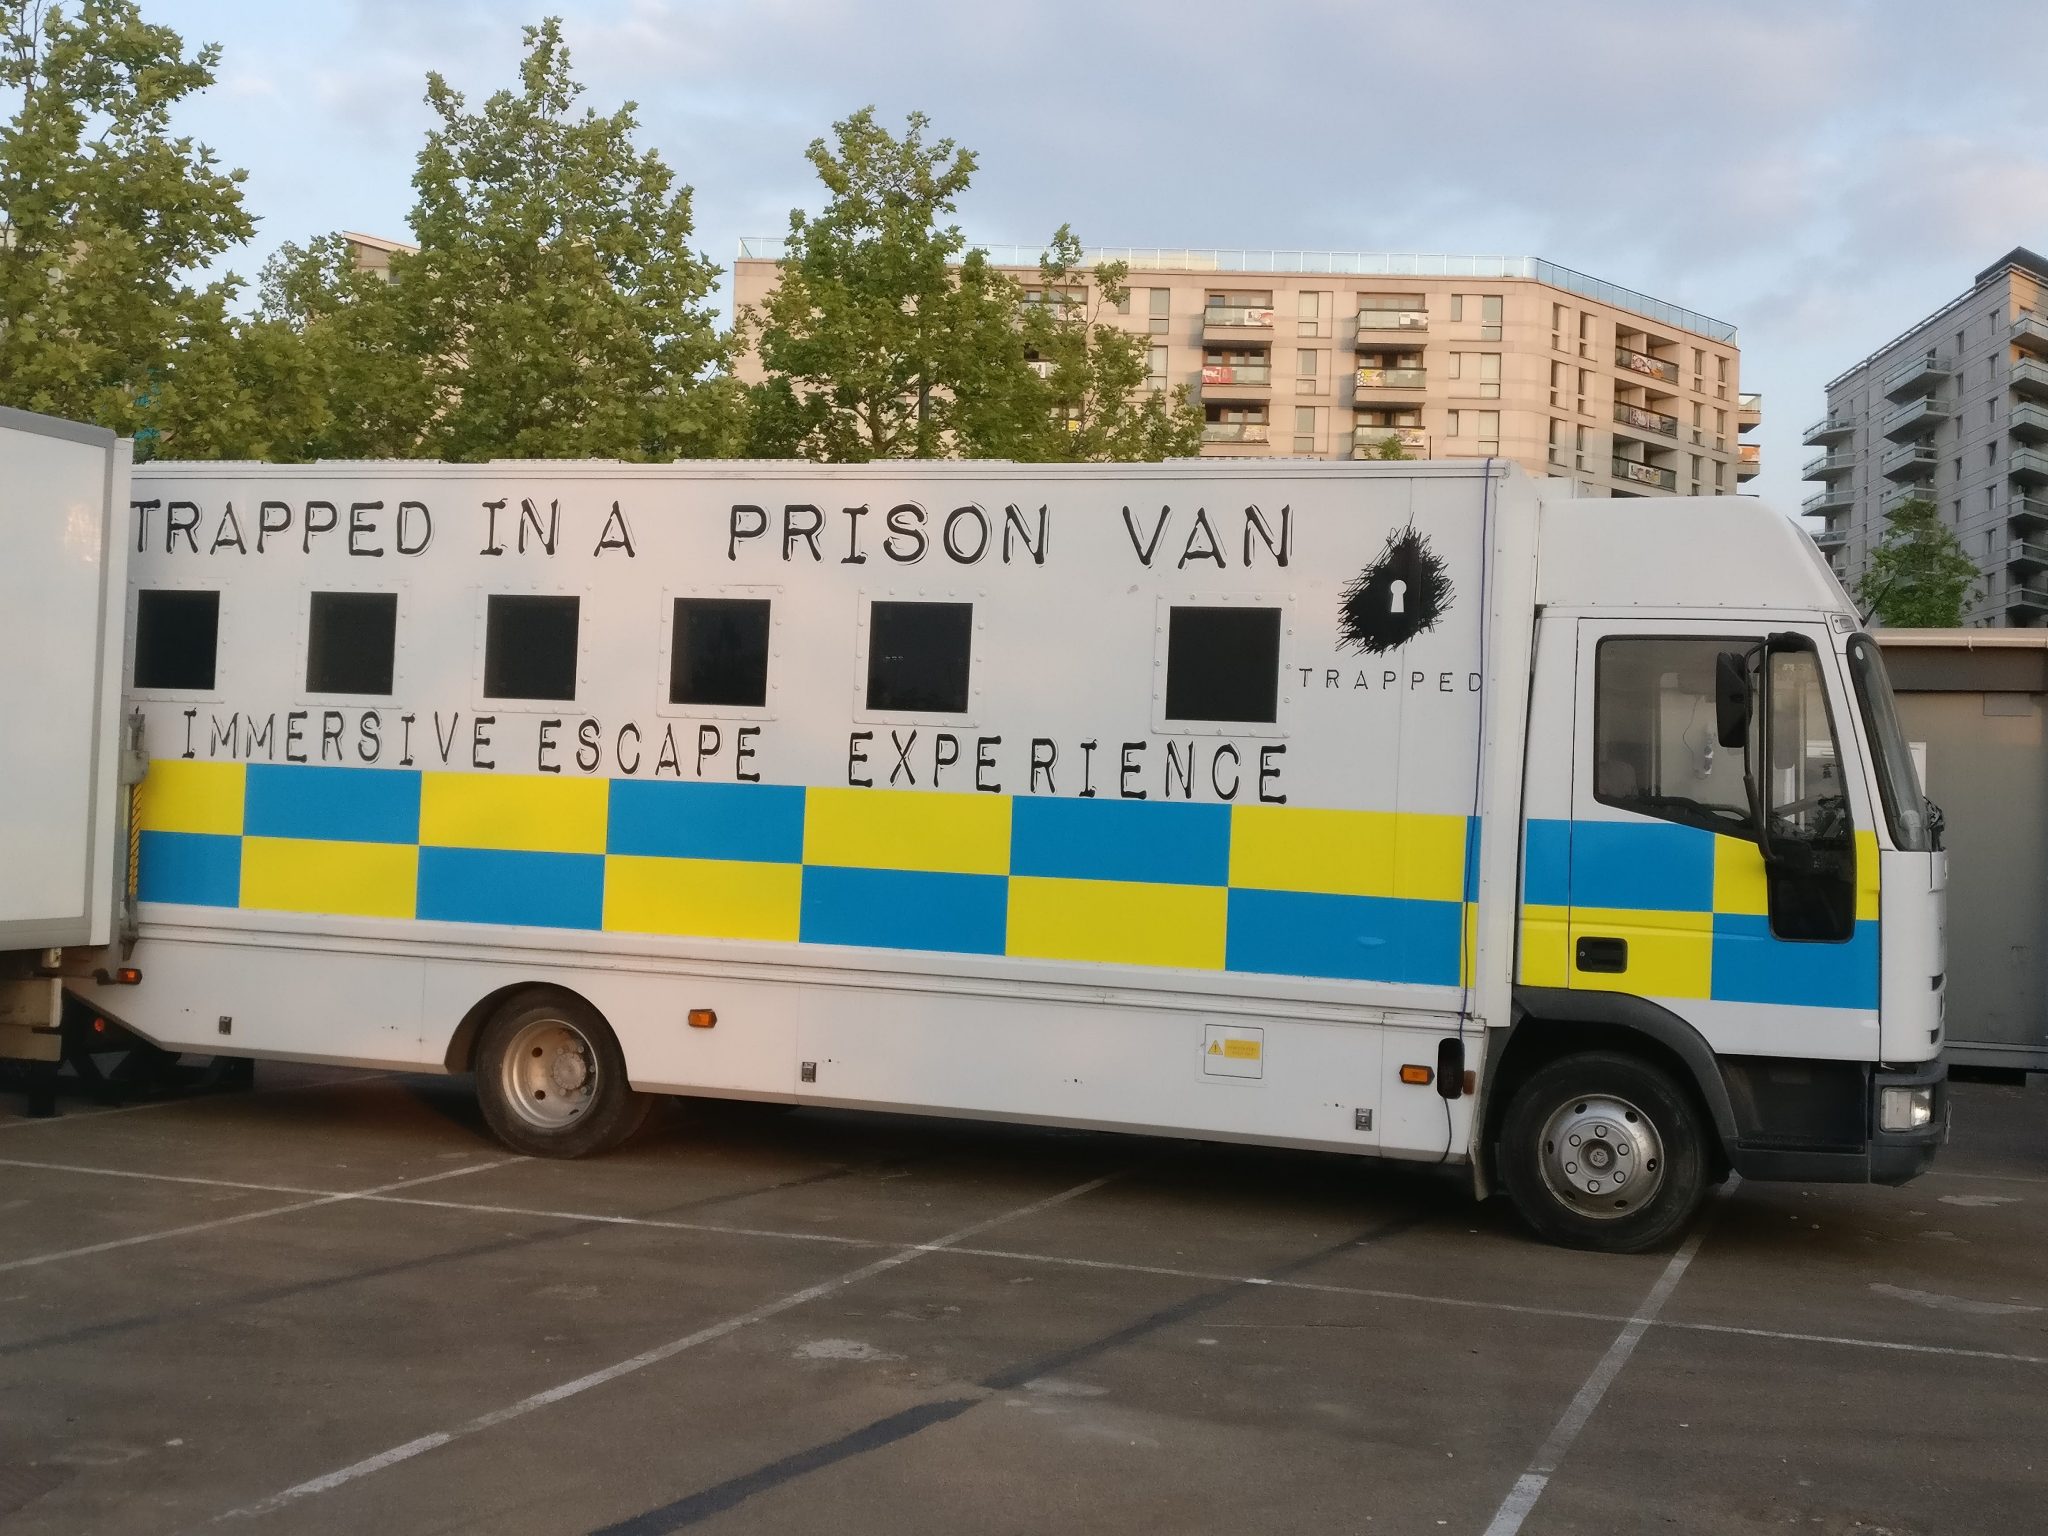 The prison van in the car park